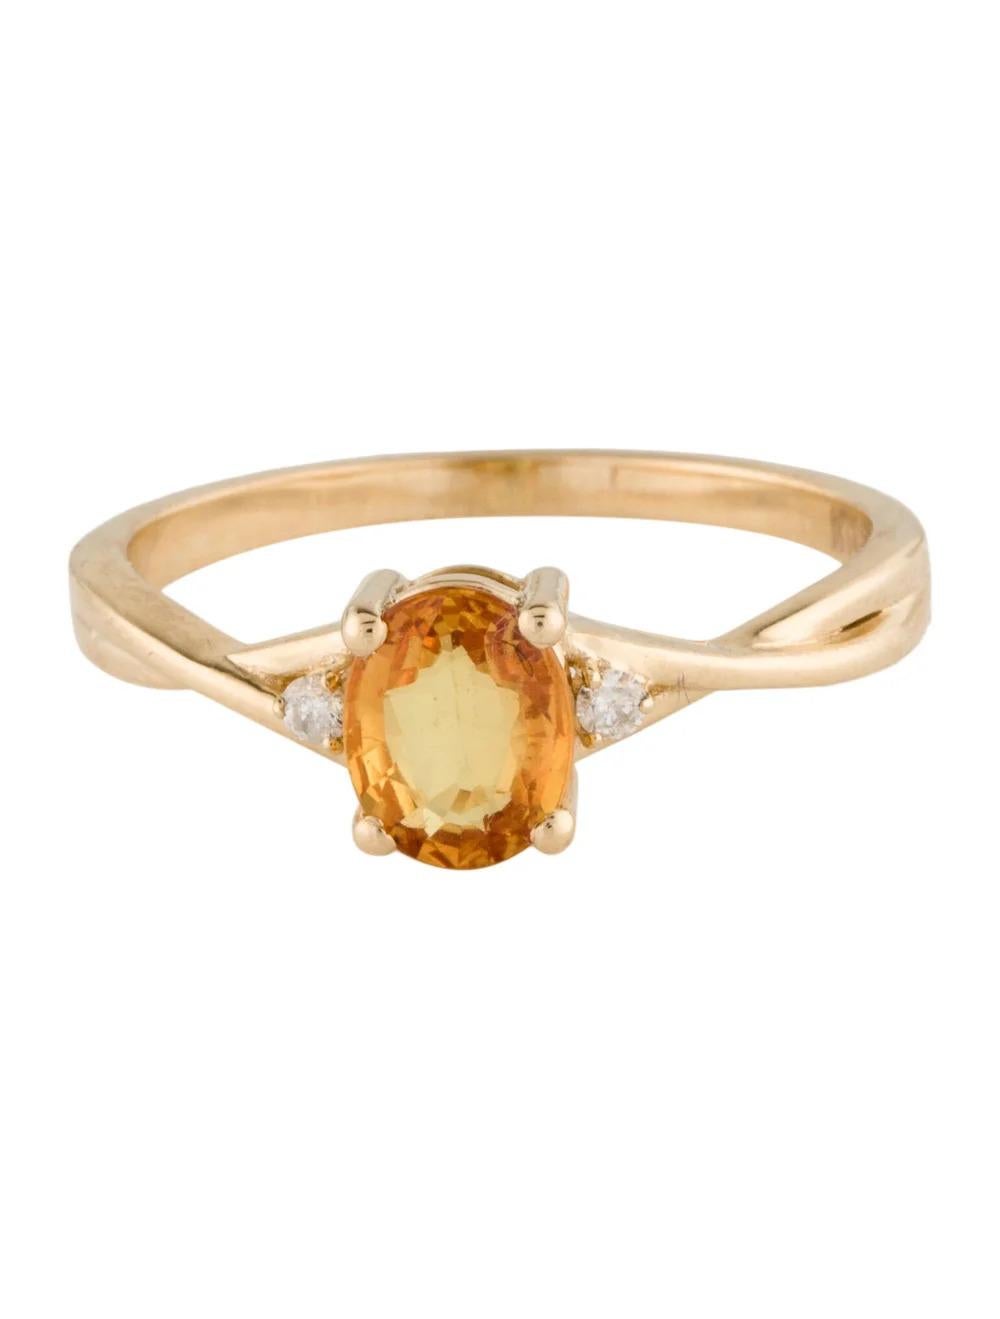 Oval Cut 14K Sapphire & Diamond Cocktail Ring, Size 6.75 - Timeless & Elegant Design For Sale